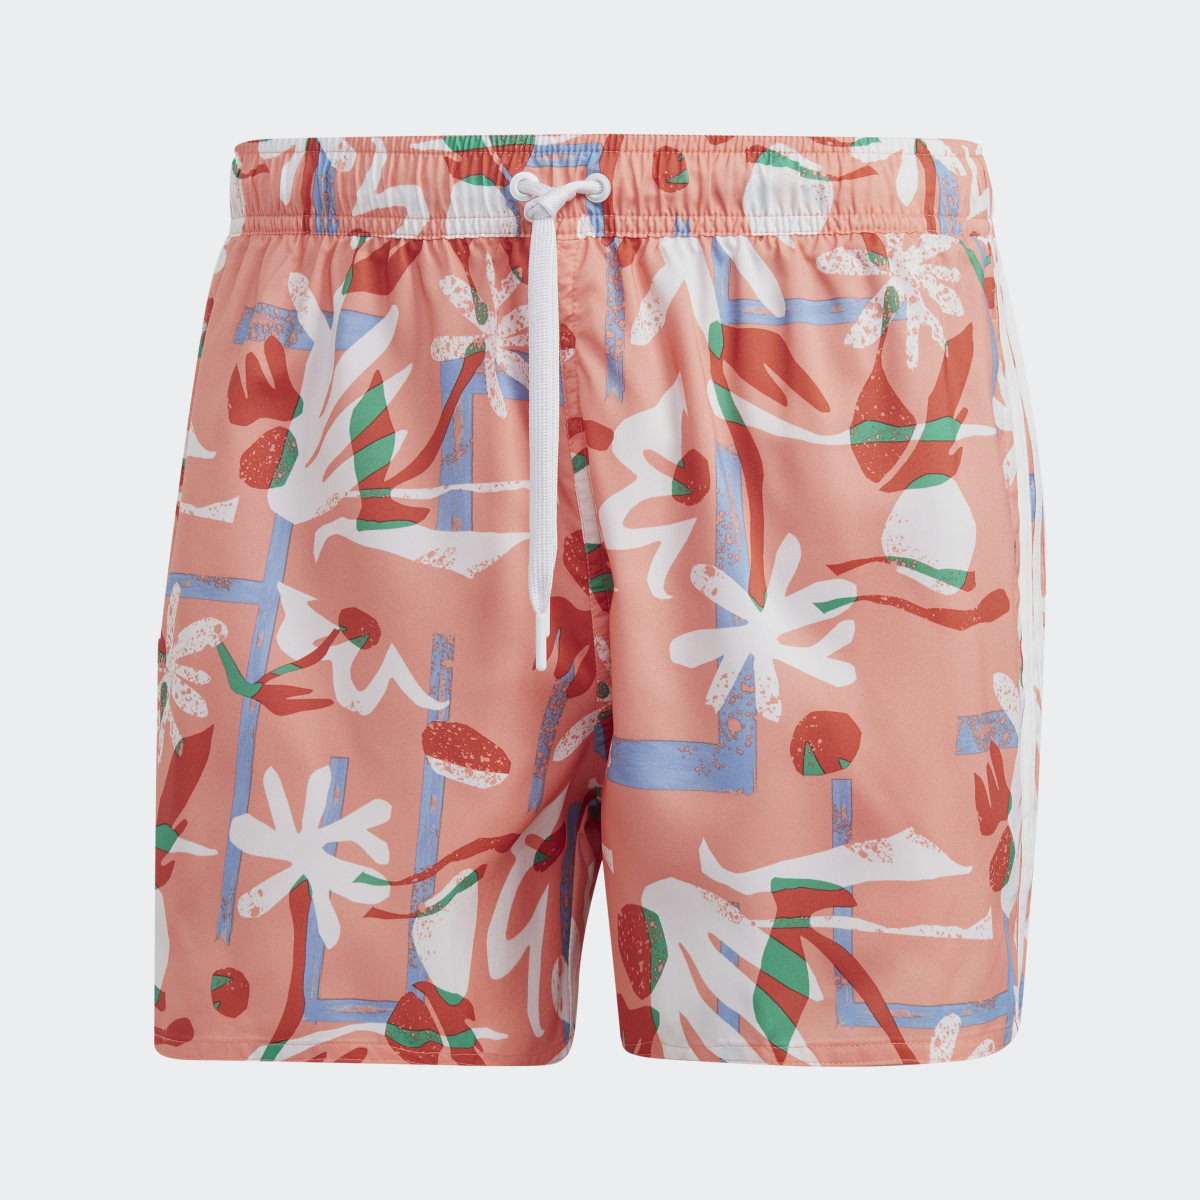 Adidas Seasonal Floral CLX Very Short Length Swim Shorts. 4